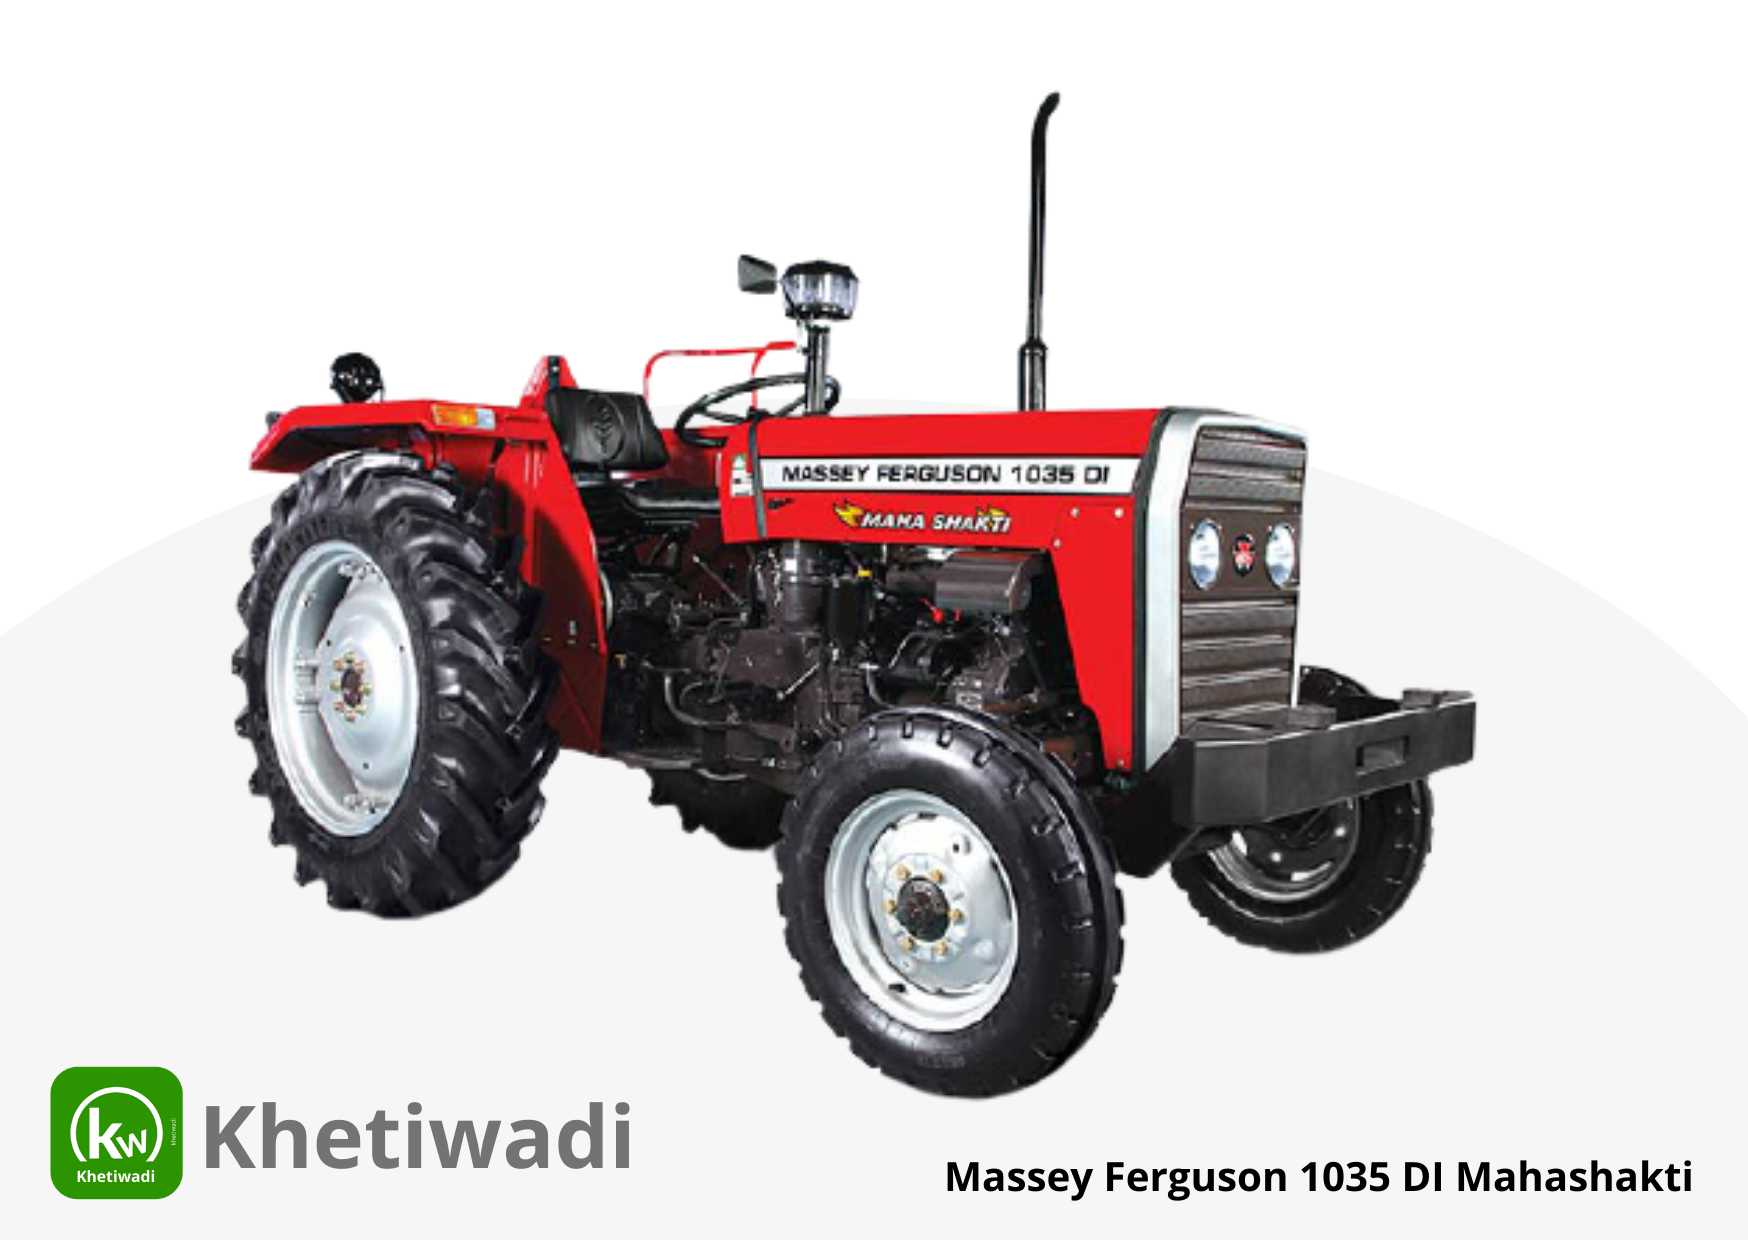 Massey Ferguson 1035 DI Mahashakti image